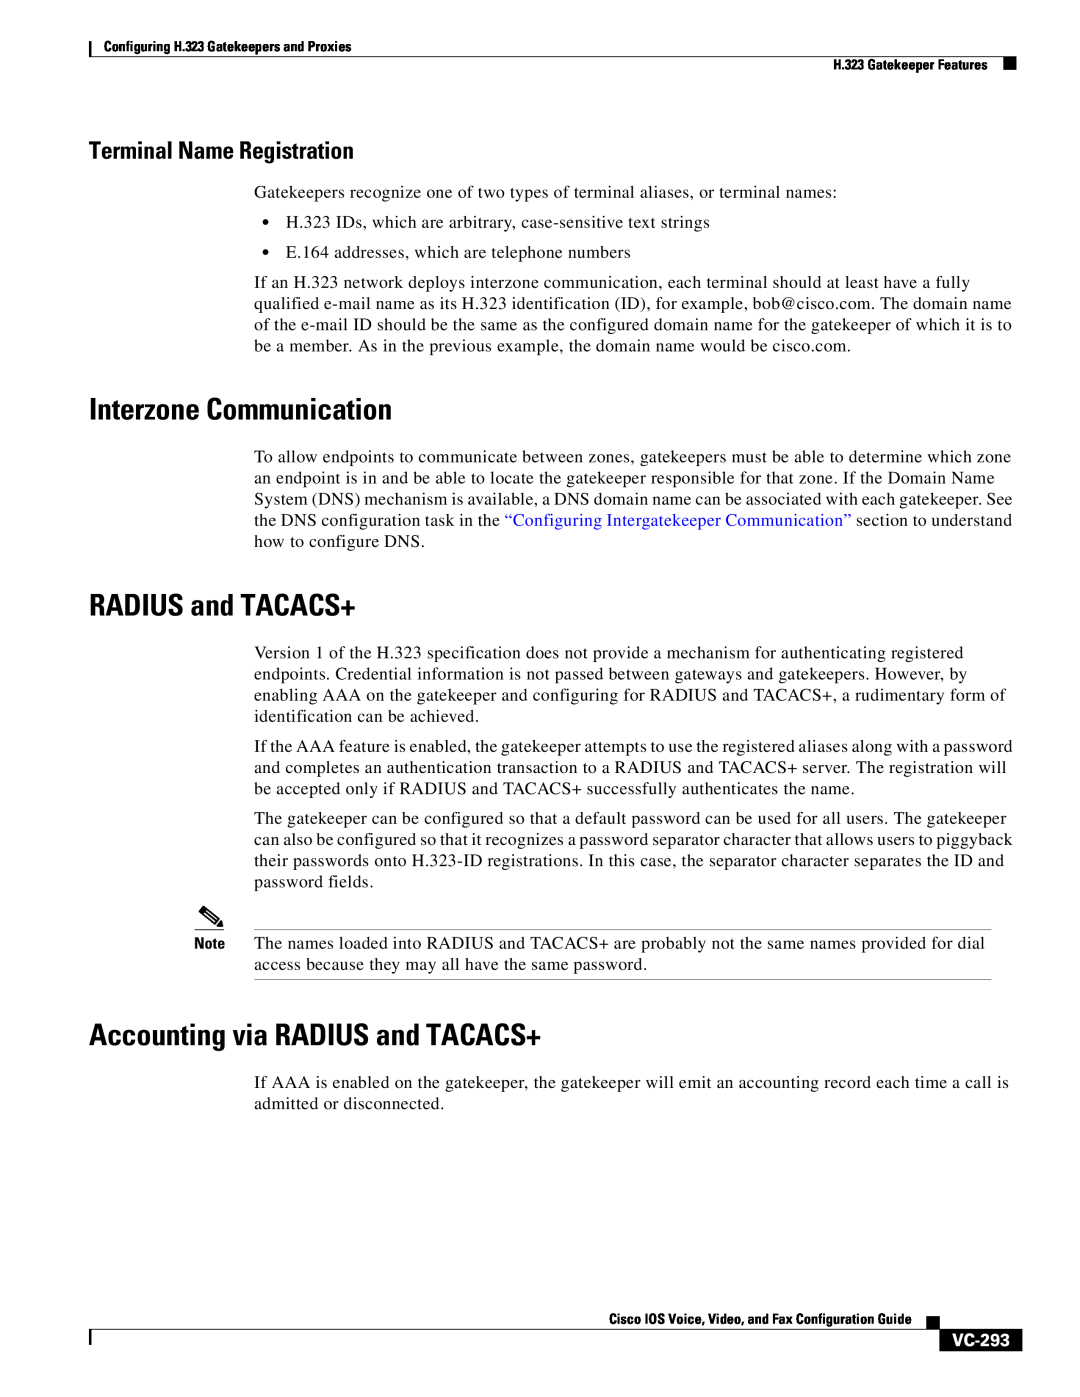 Cisco Systems VC-289 Interzone Communication, Accounting via RADIUS and TACACS+, Terminal Name Registration, VC-293 